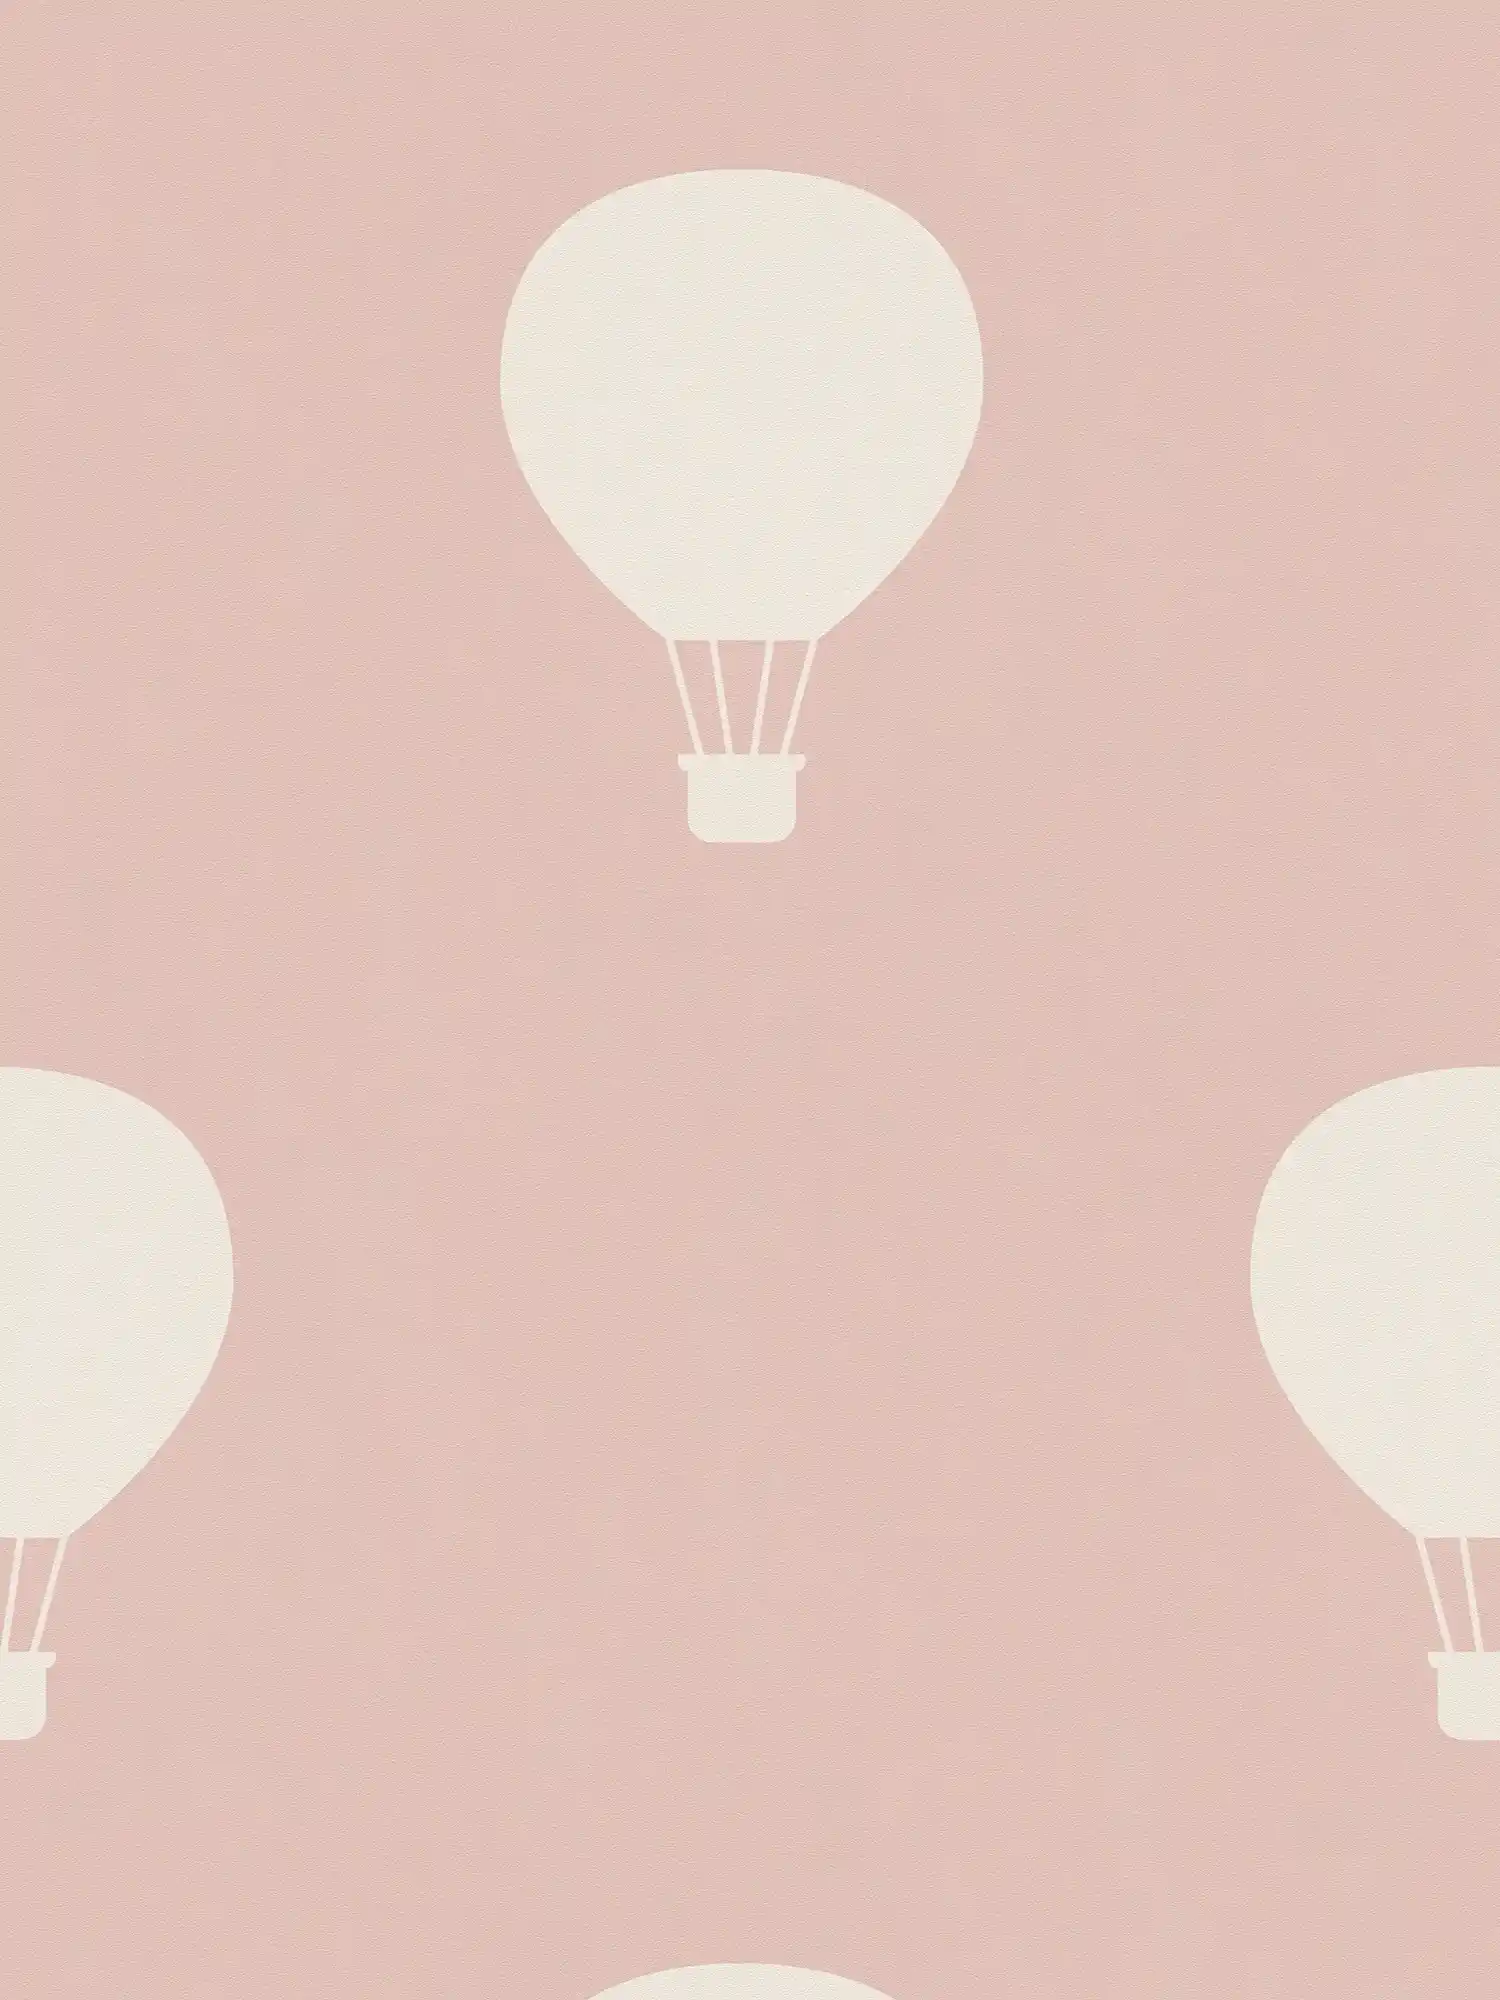 Nursery wallpaper with hot balloon motif - cream, pink
